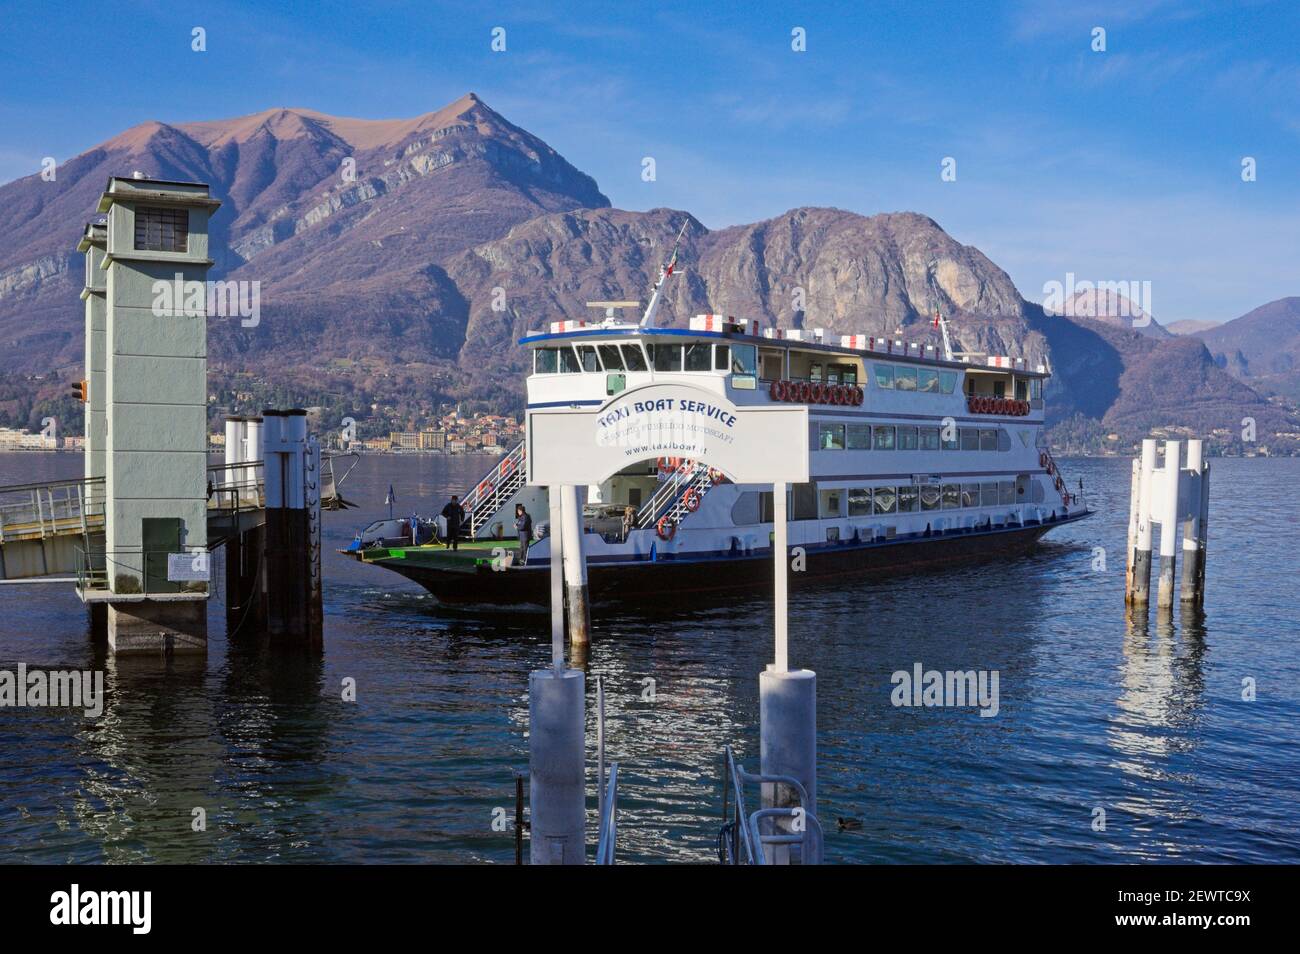 Autofähre nähert sich dem Pier von Bellagio, Comer See, Lombardei, Italien Stockfoto